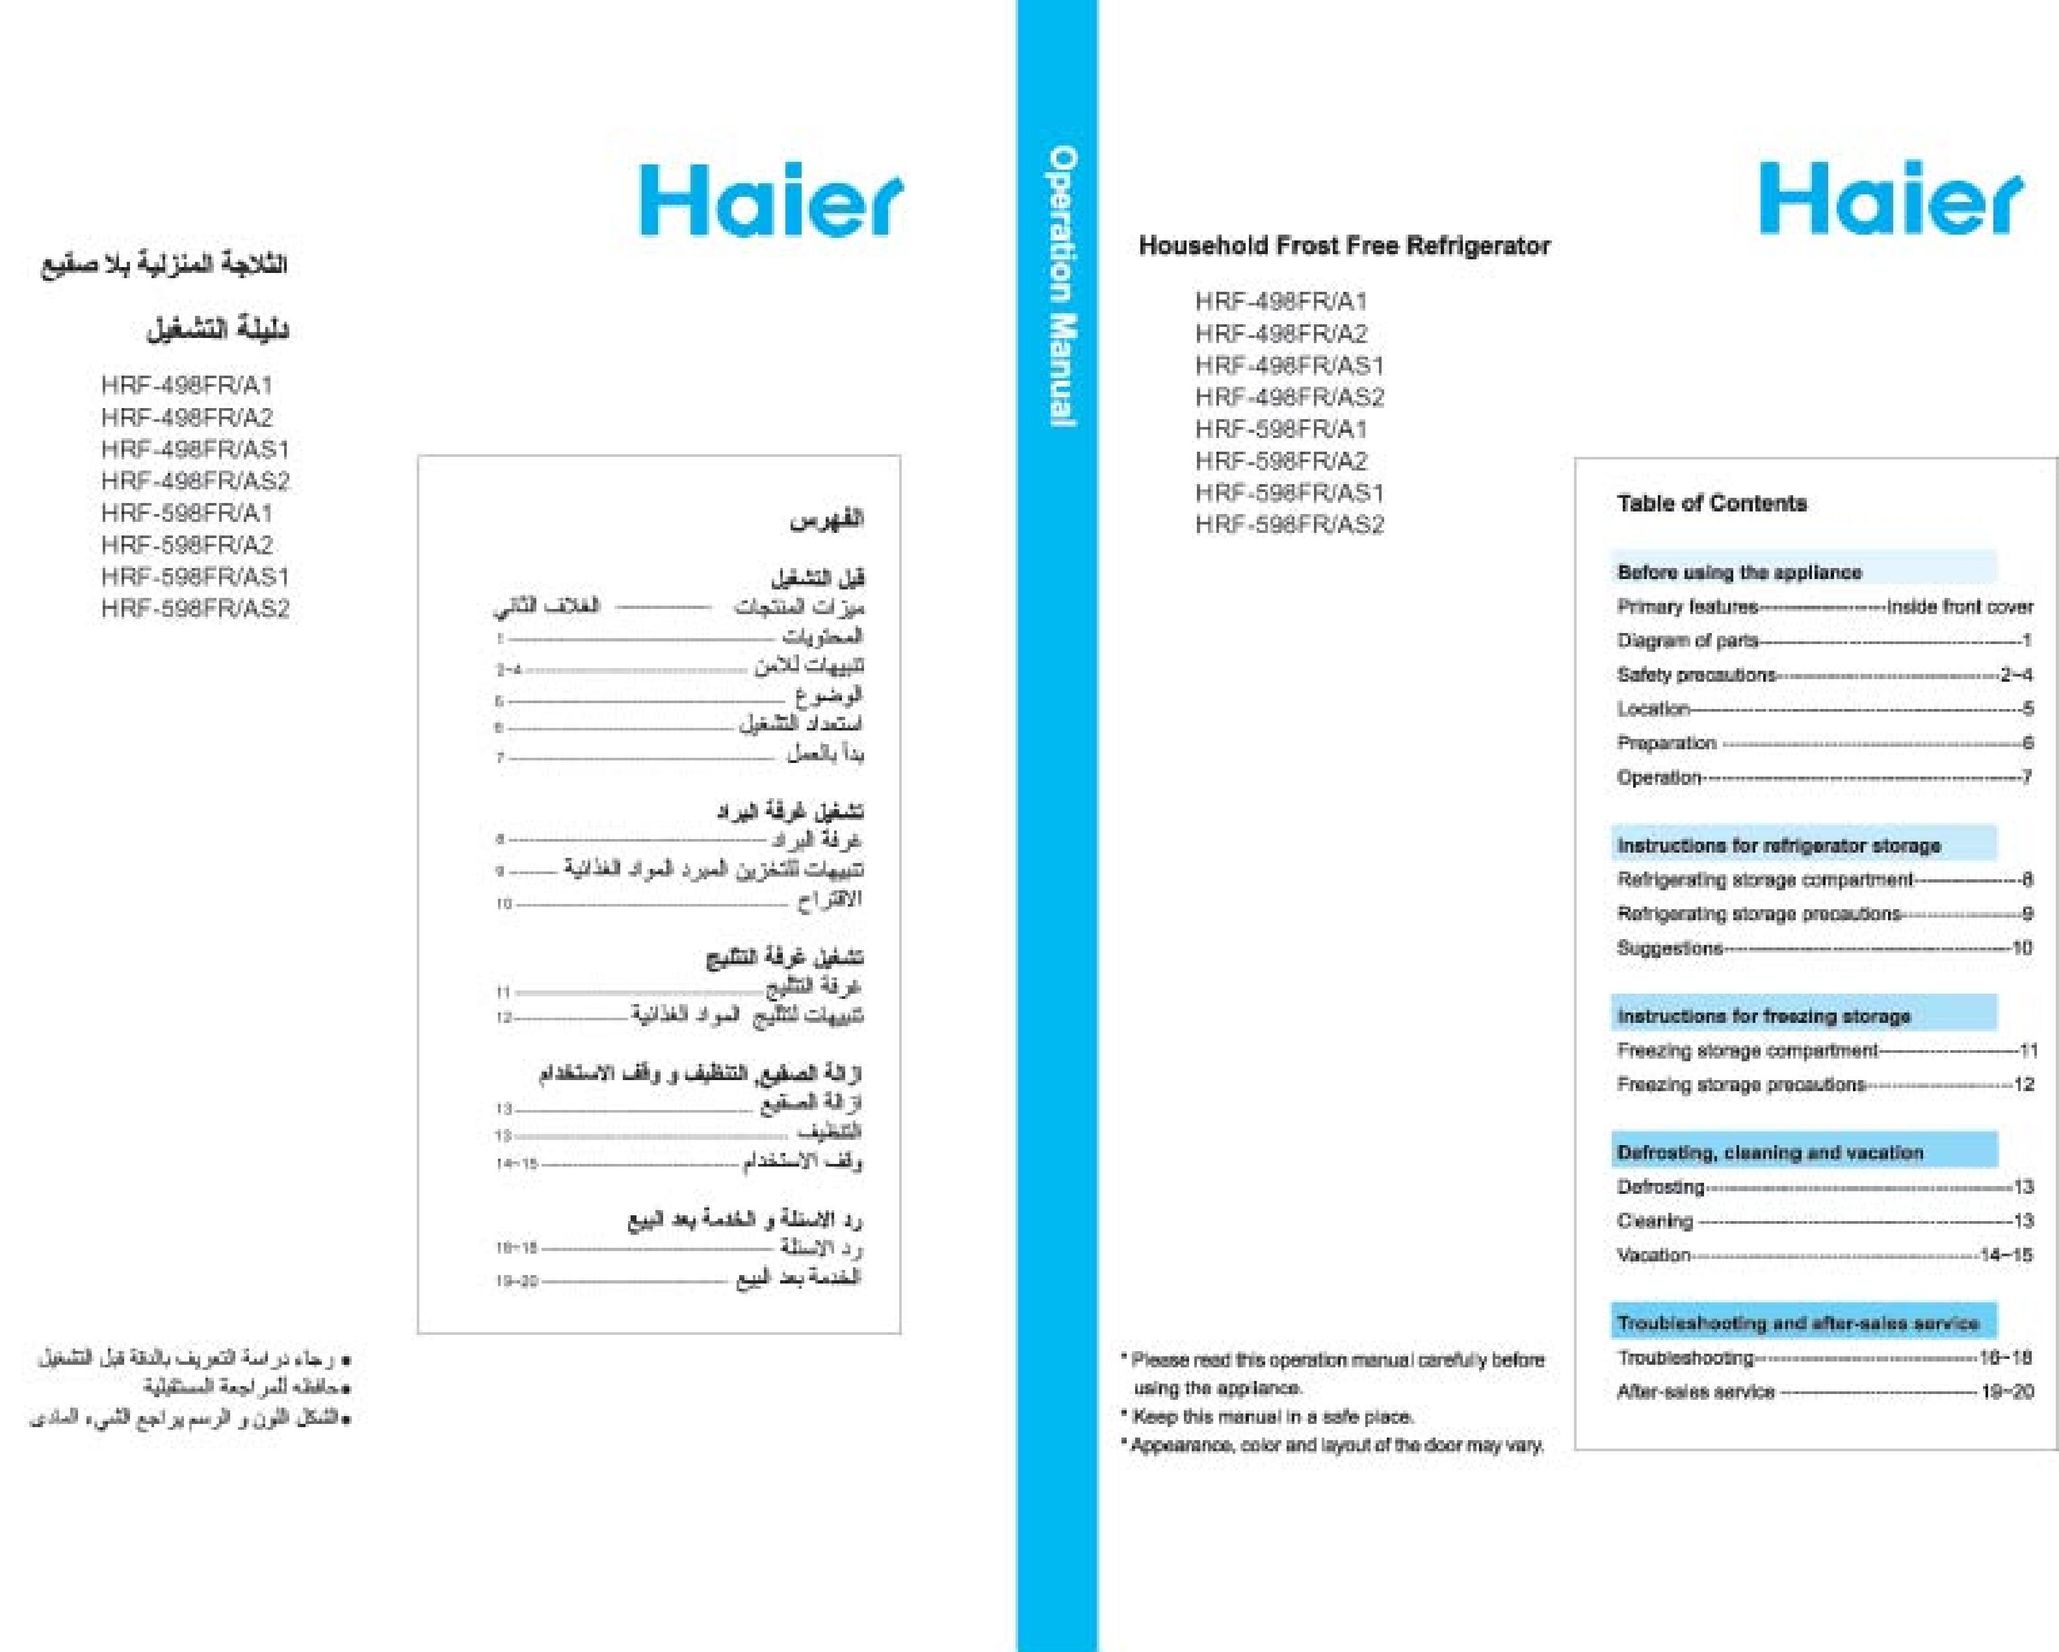 Haier HRF-498FR/A2 Saw User Manual